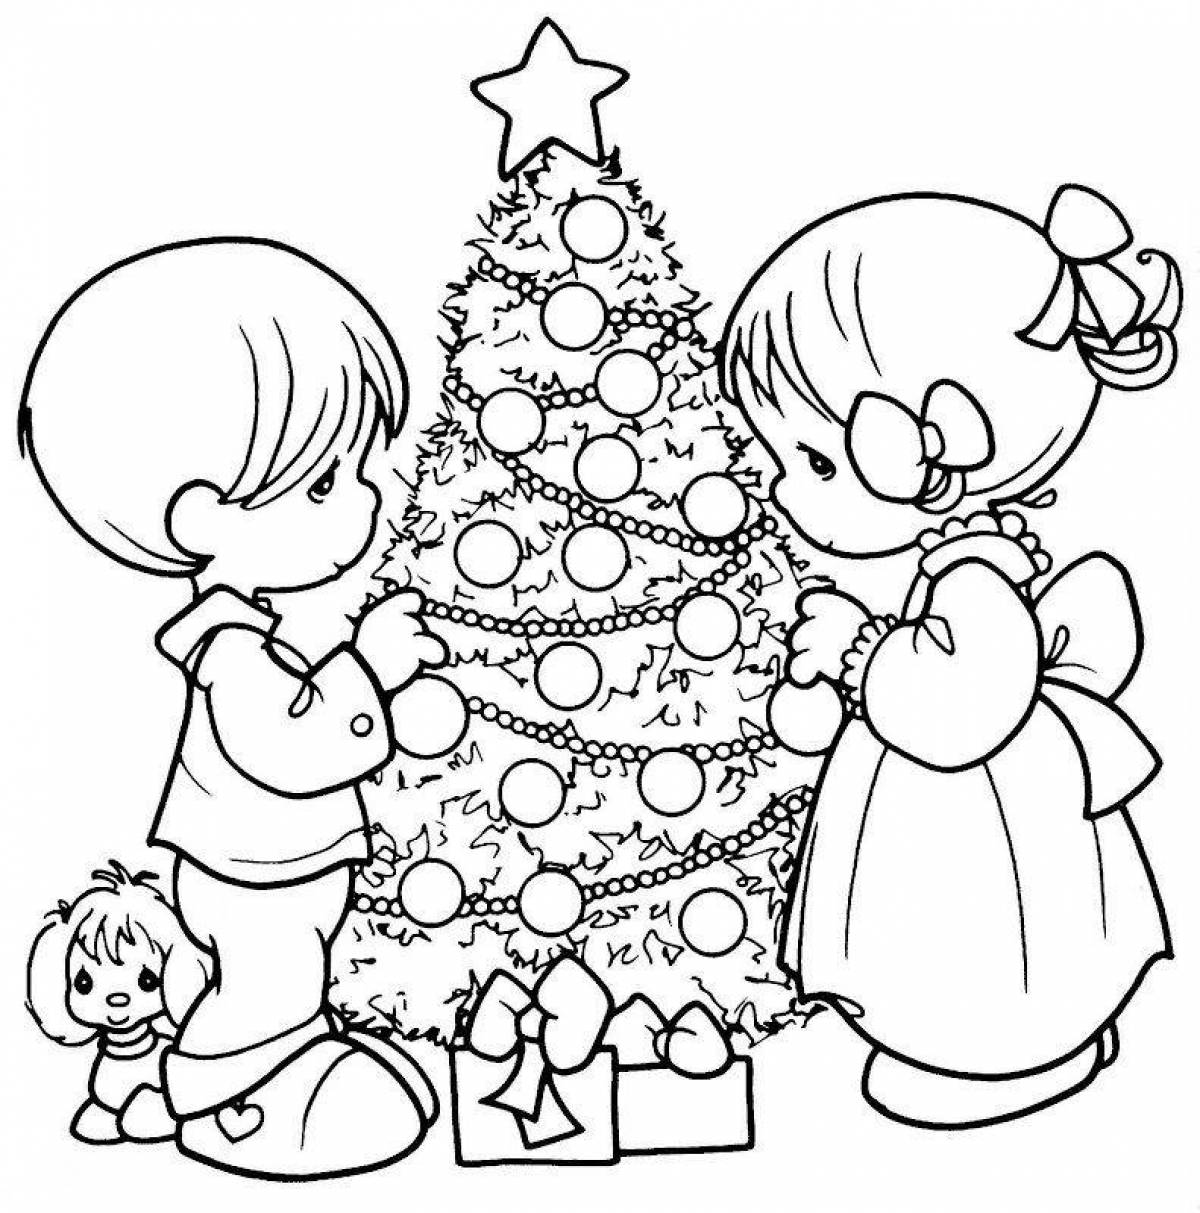 Joyful Christmas coloring book for kids